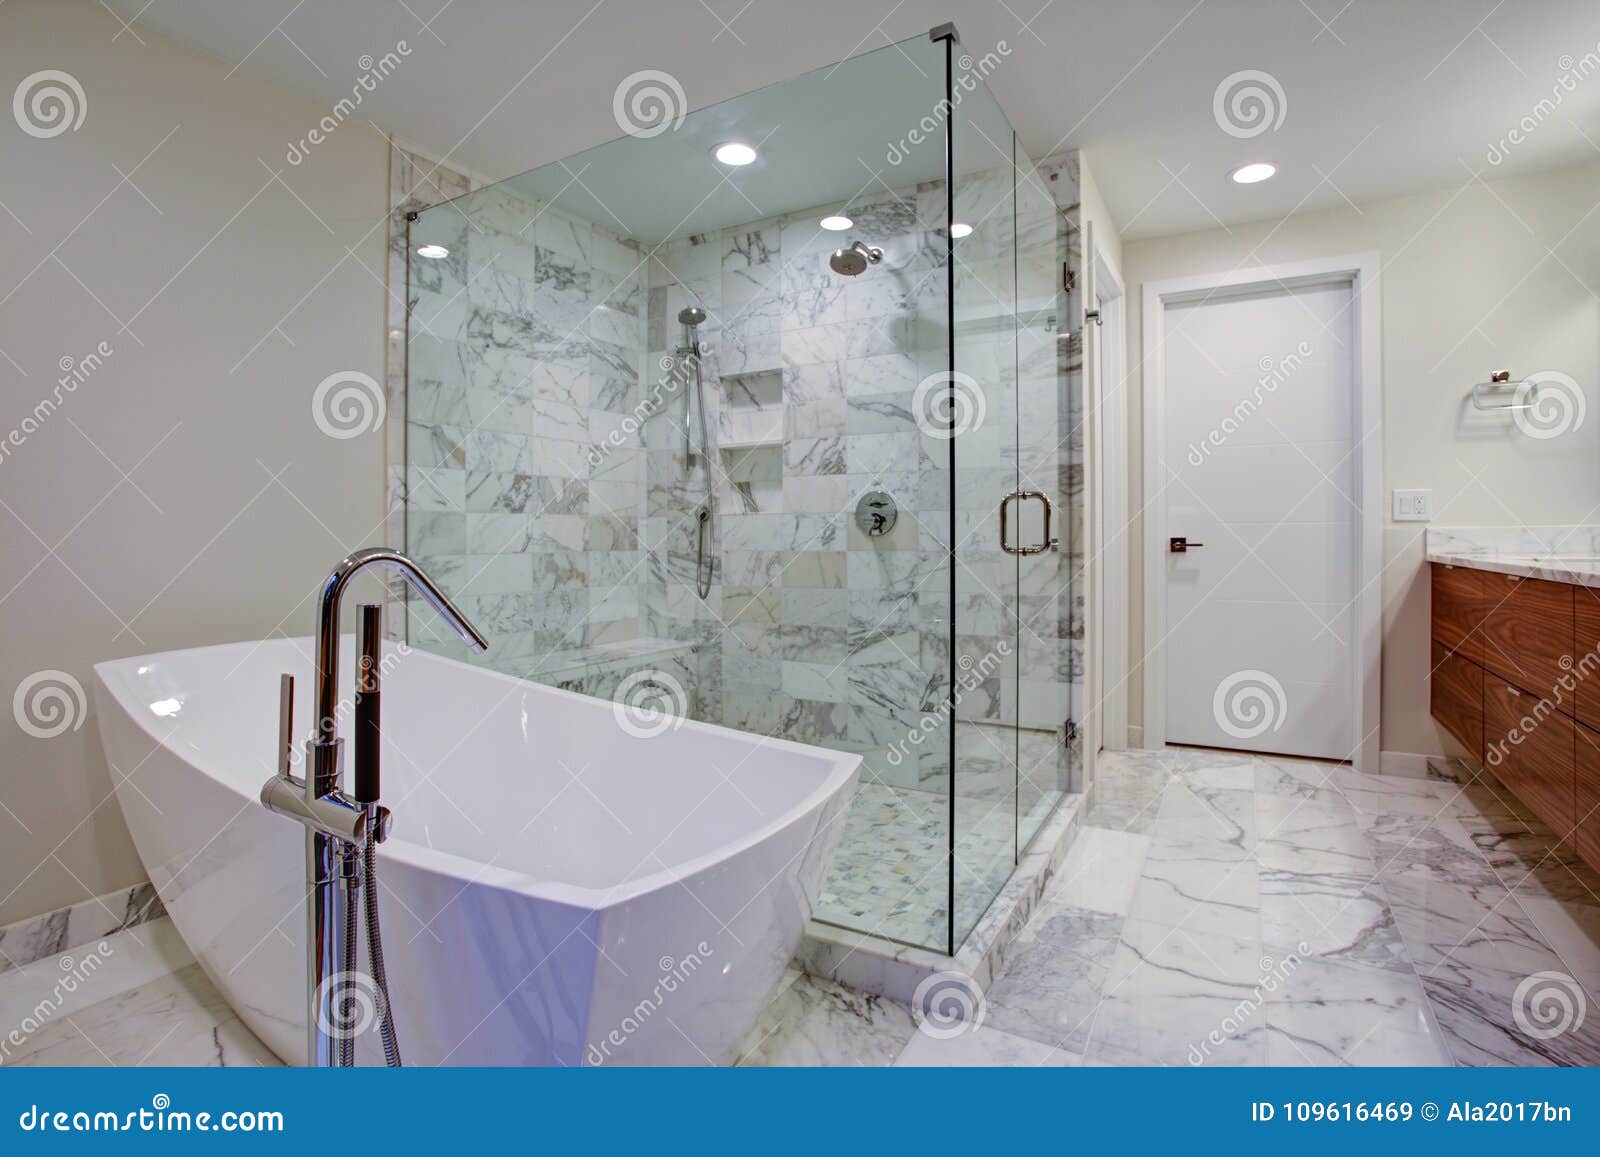 sleek bathroom with freestanding bathtub and walk in shower